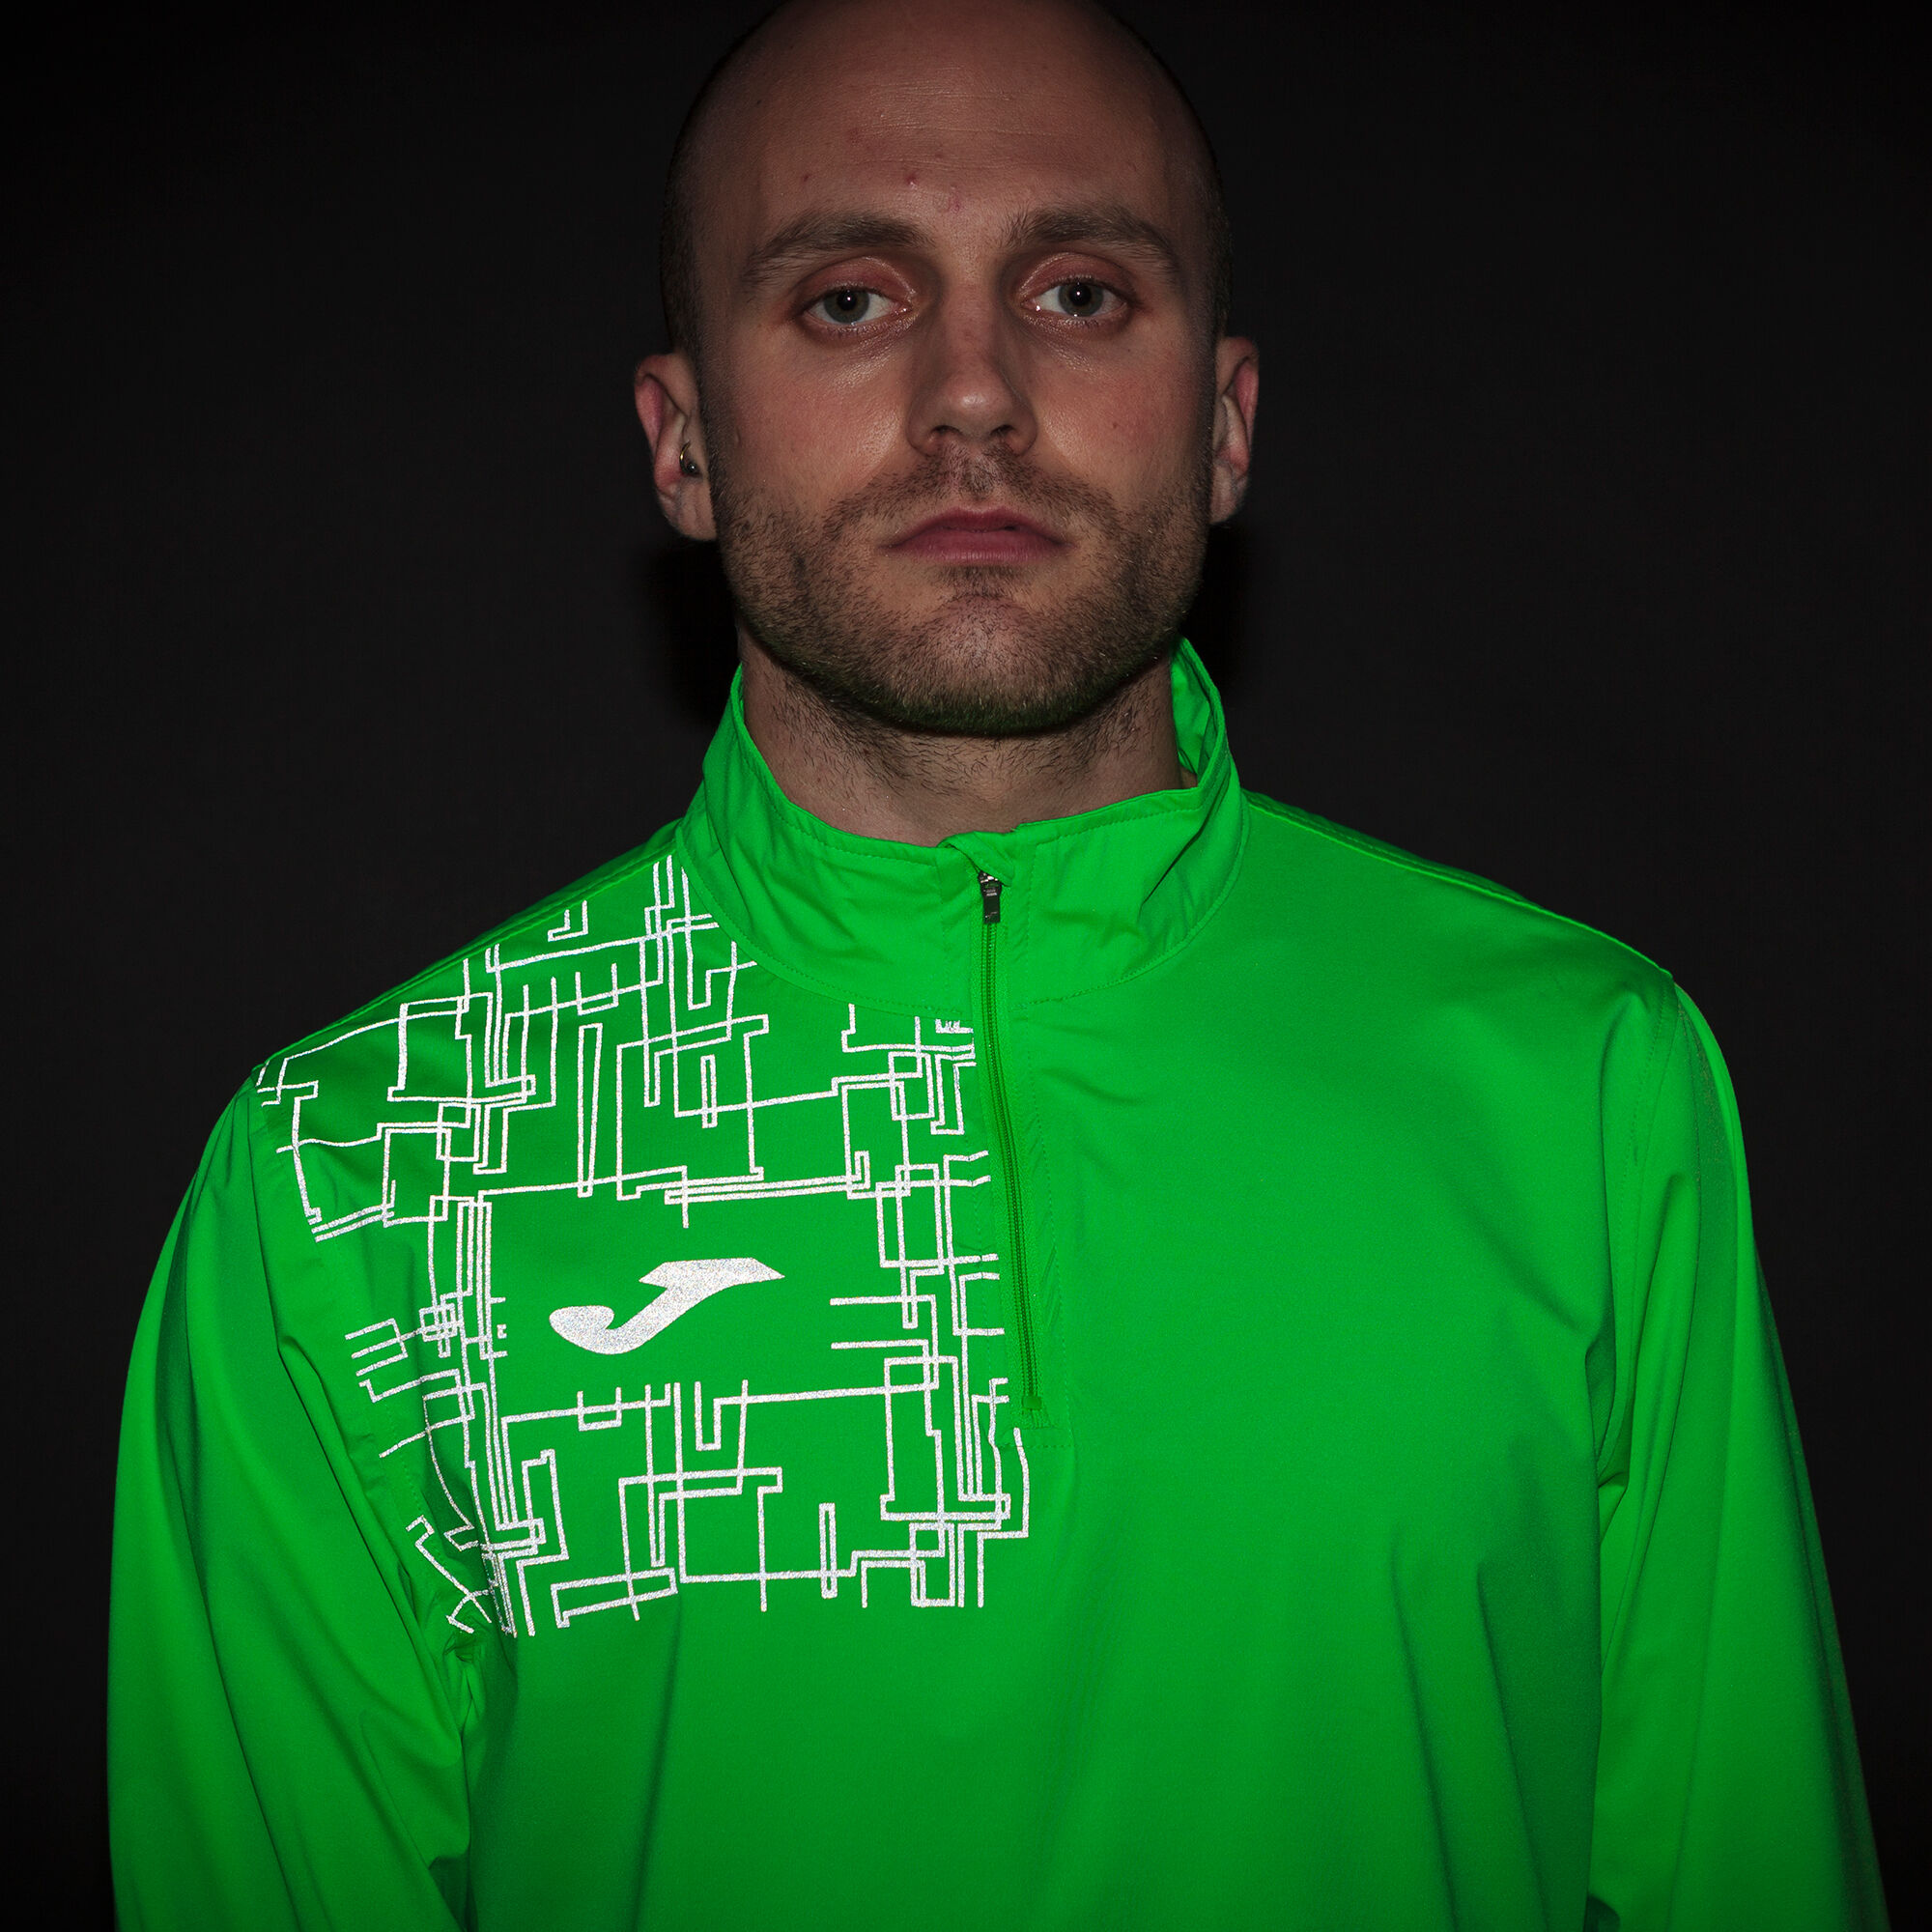 Sweatshirt man Elite VIII fluorescent green